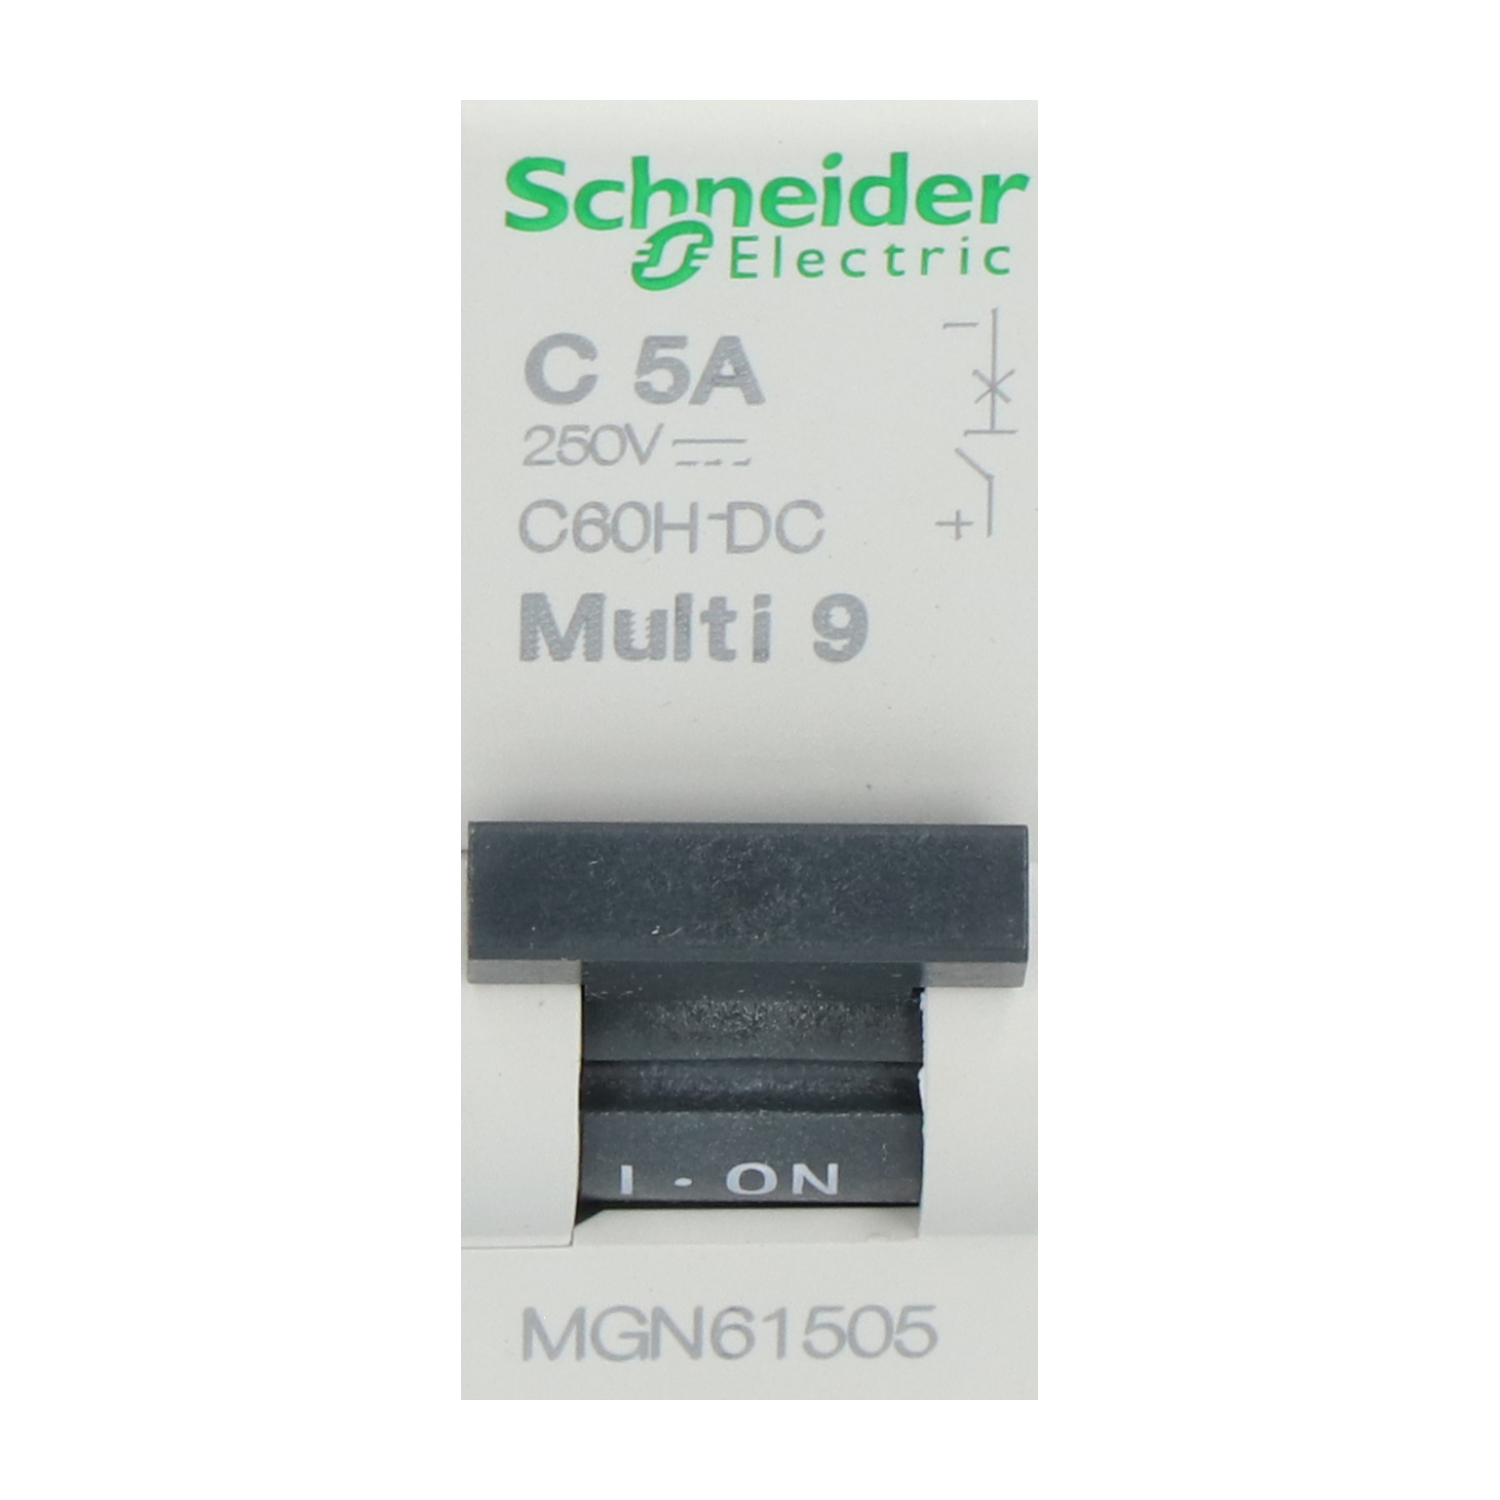 Schneider Electric MGN61505  Multi9 C60H DC - disjoncteur